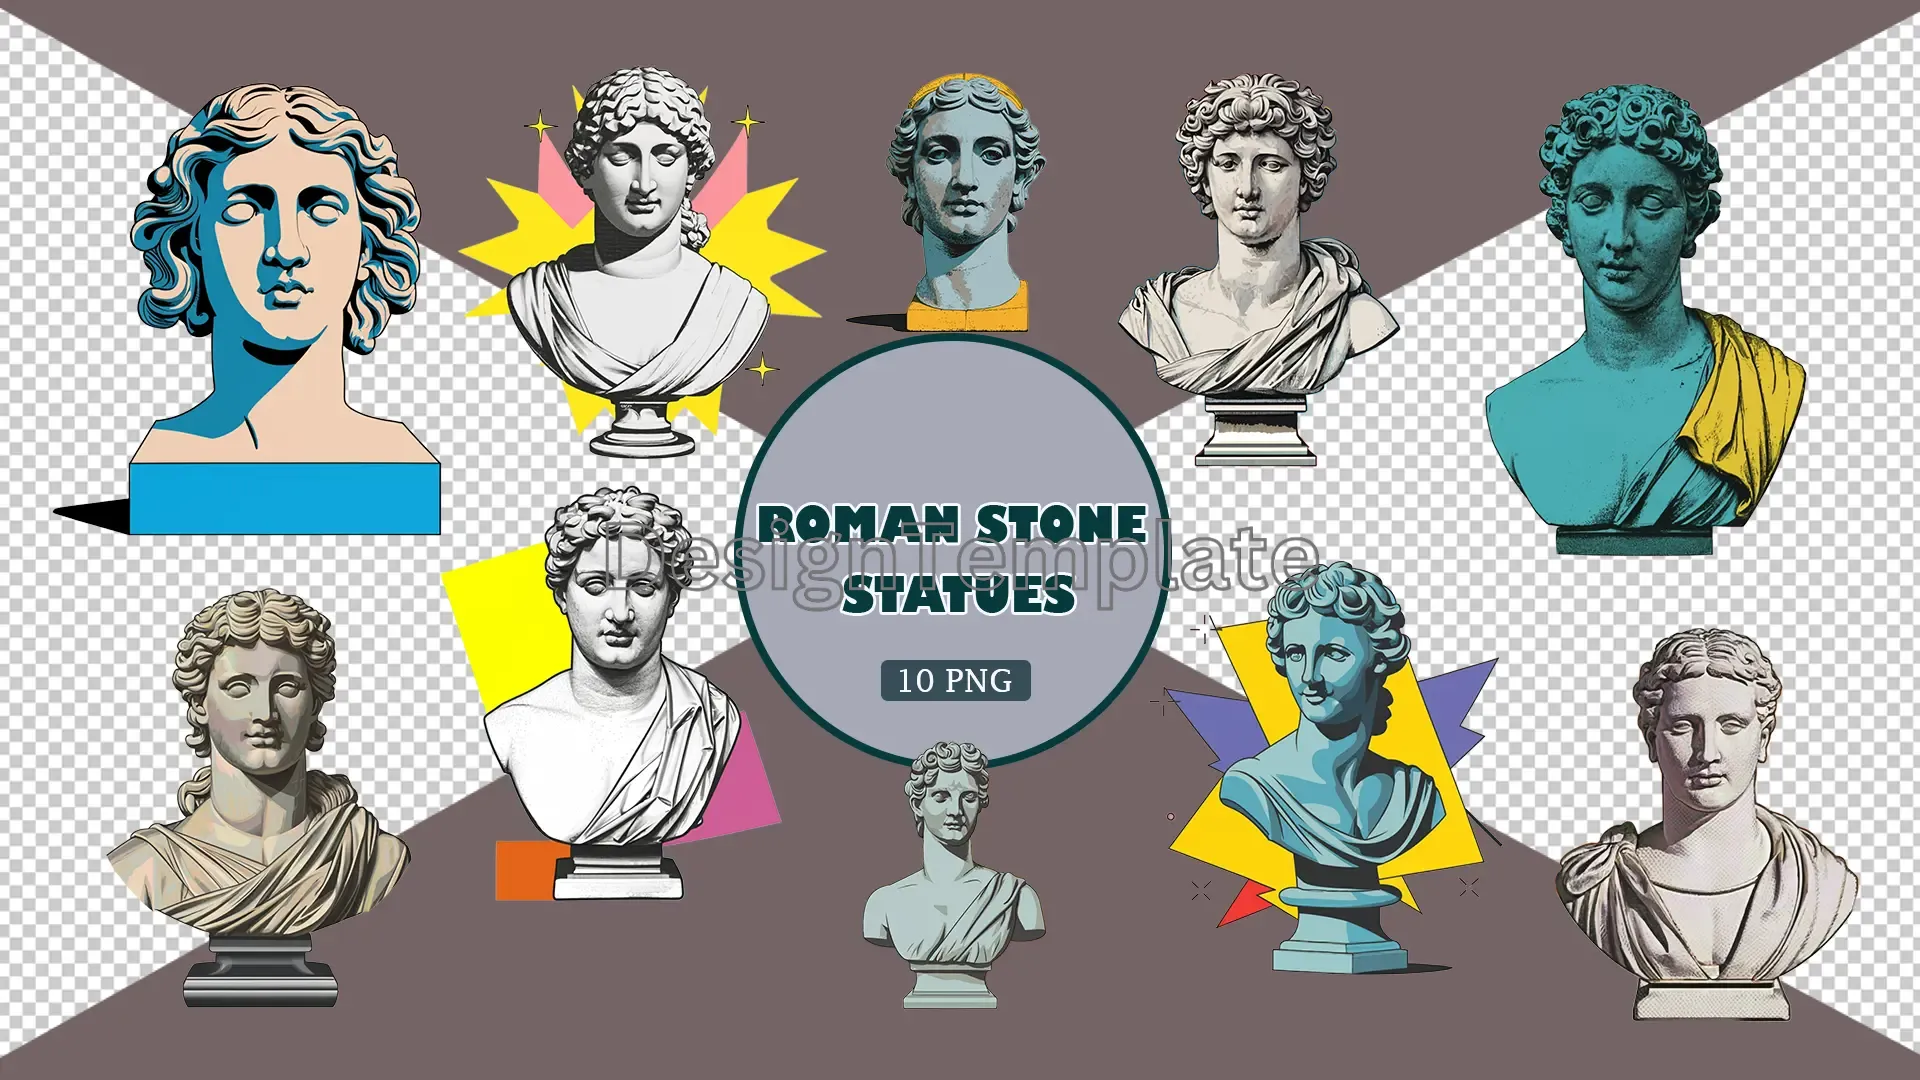 Classical Roman Stone Statues 3D Elements Pack